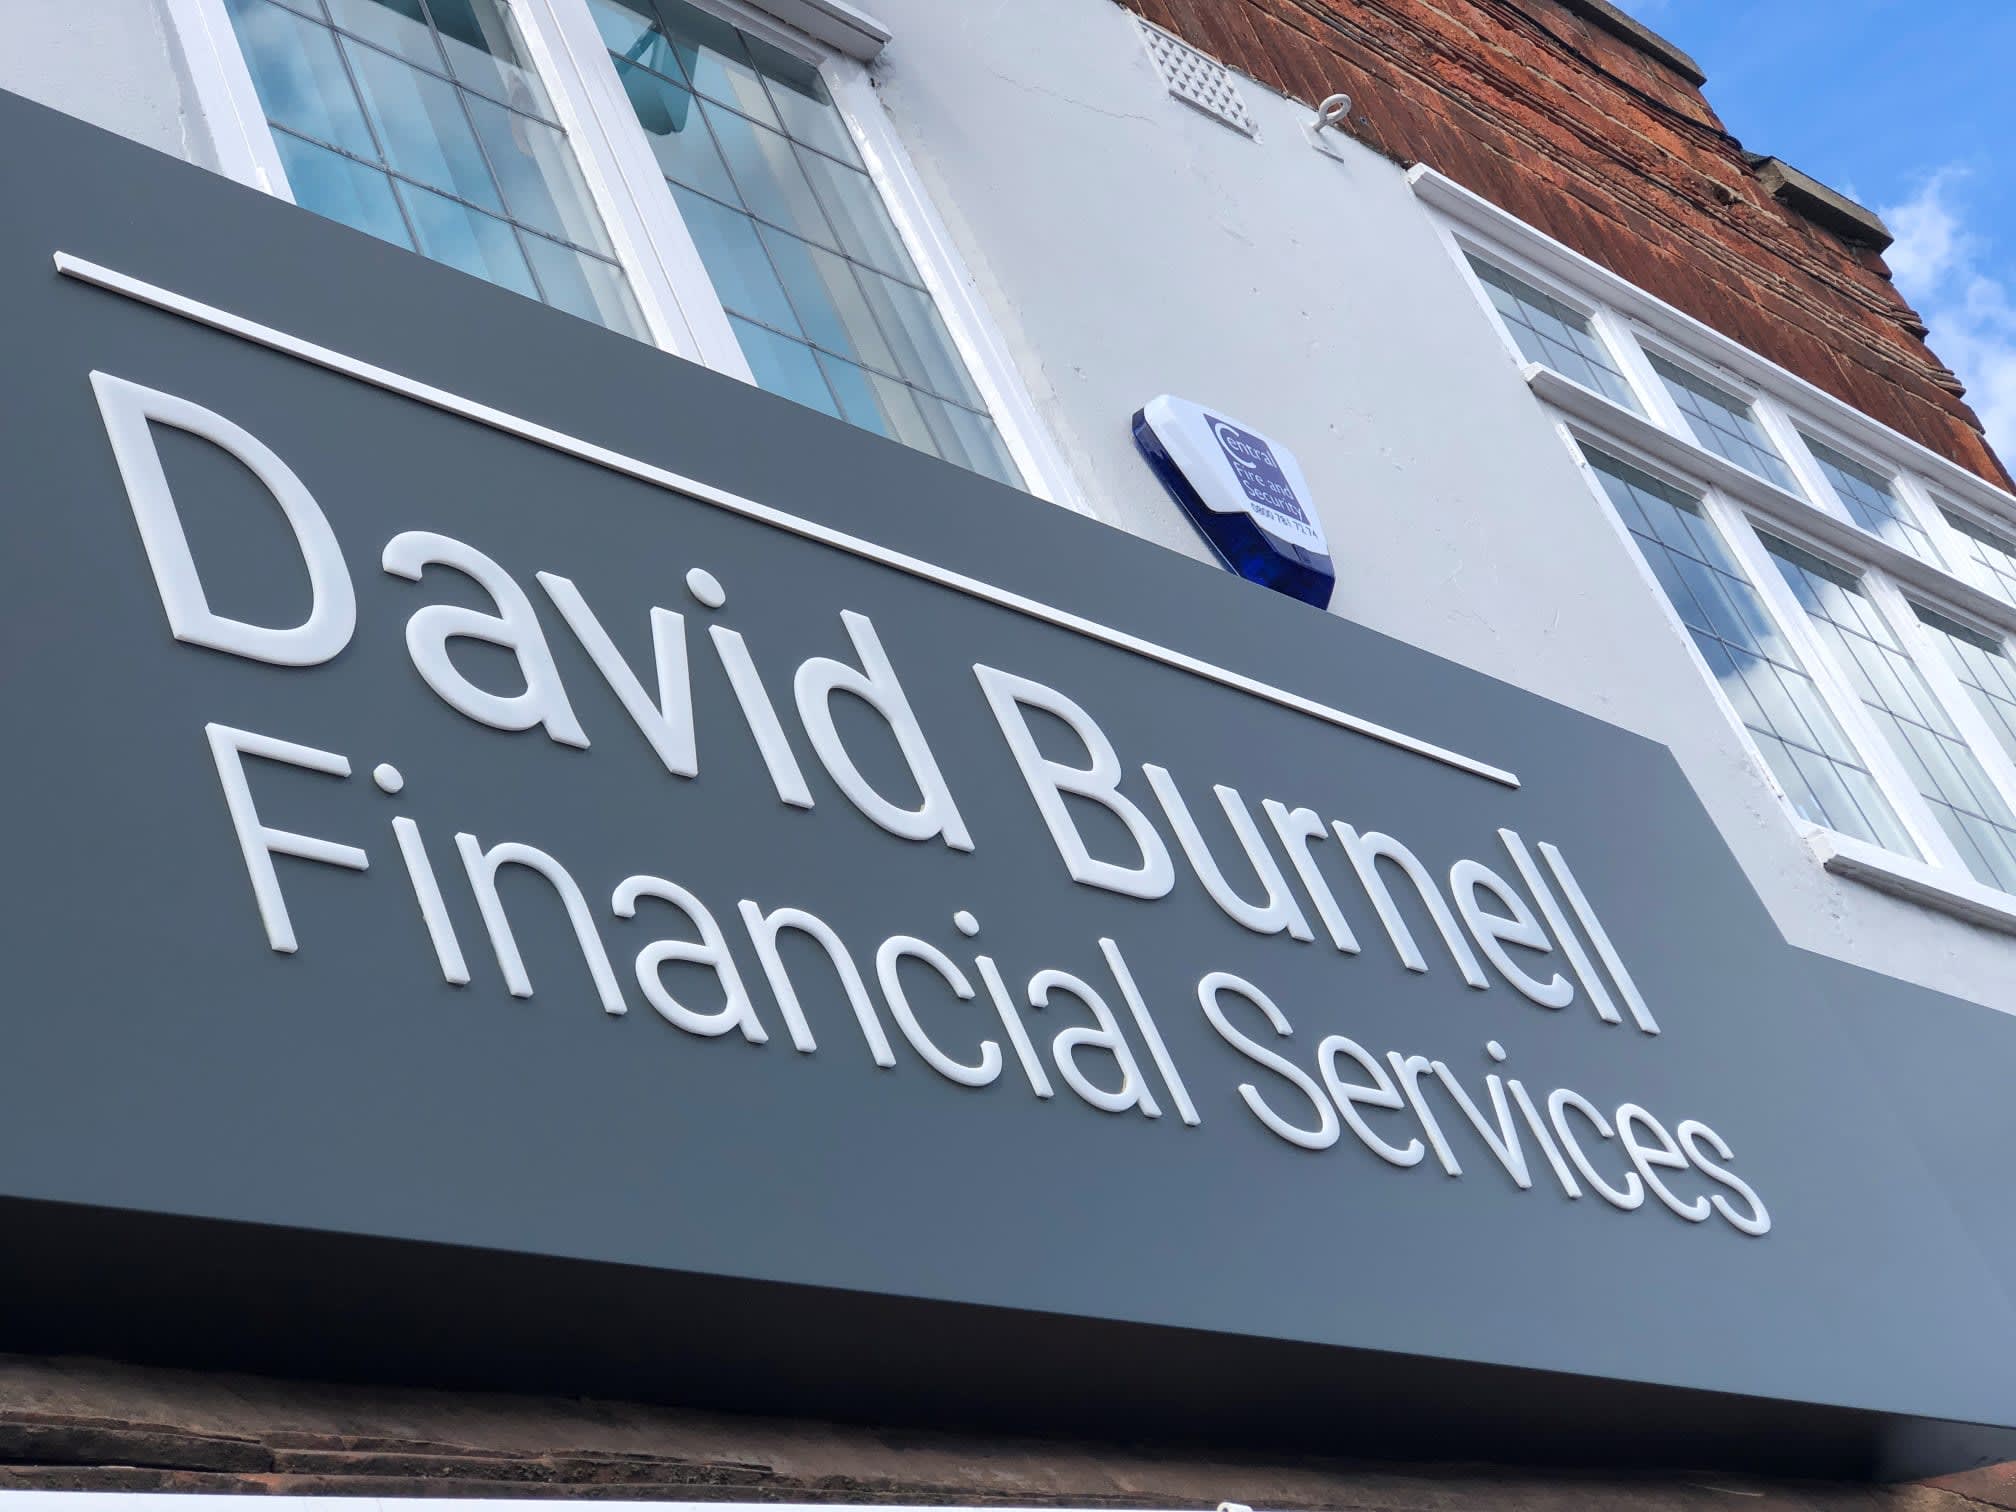 David Burnell Financial Services Nottingham 01159 455199